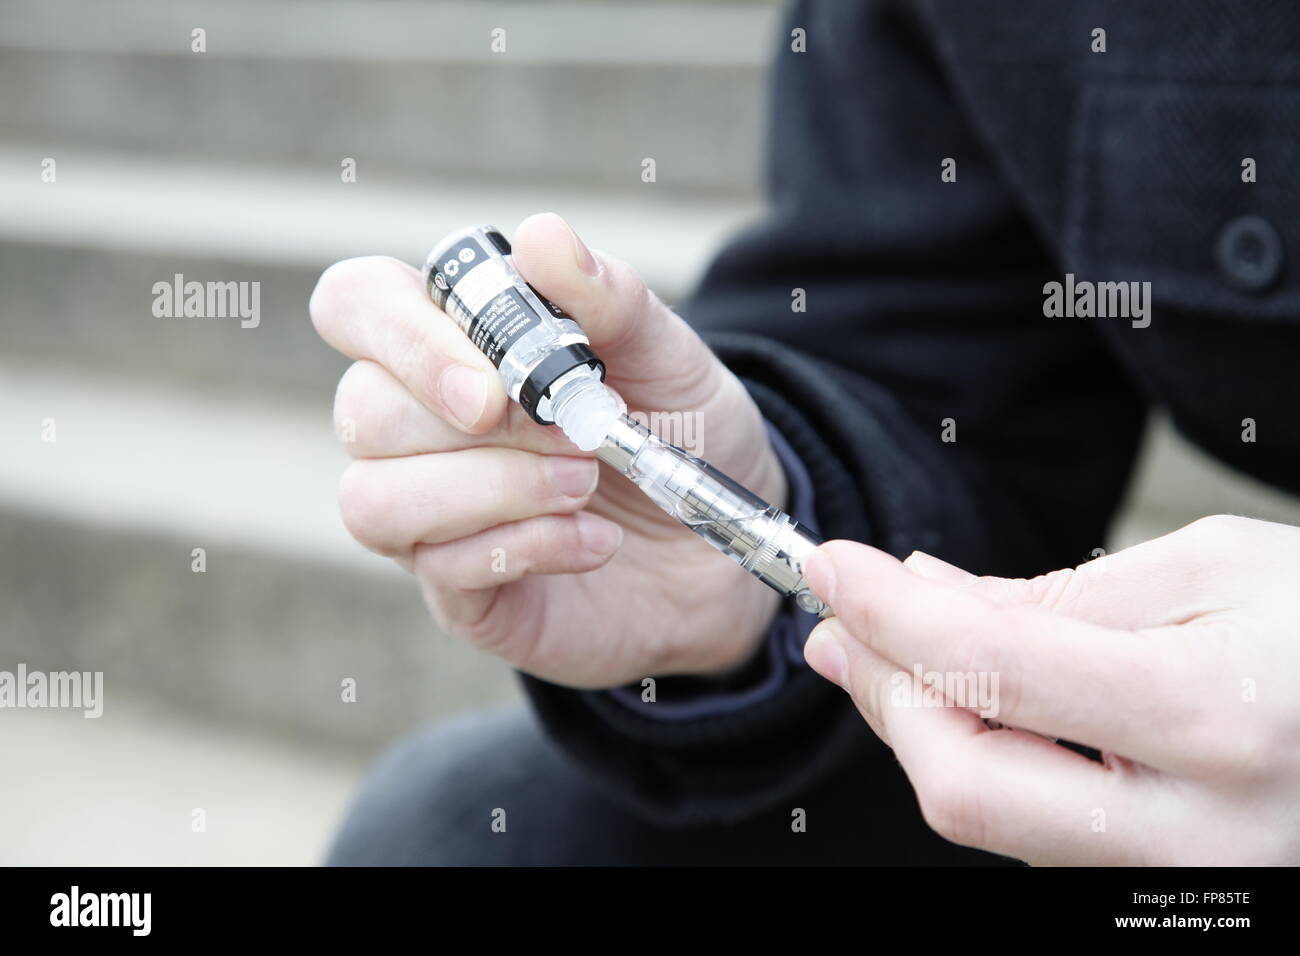 Fill up an e-cigarette Stock Photo